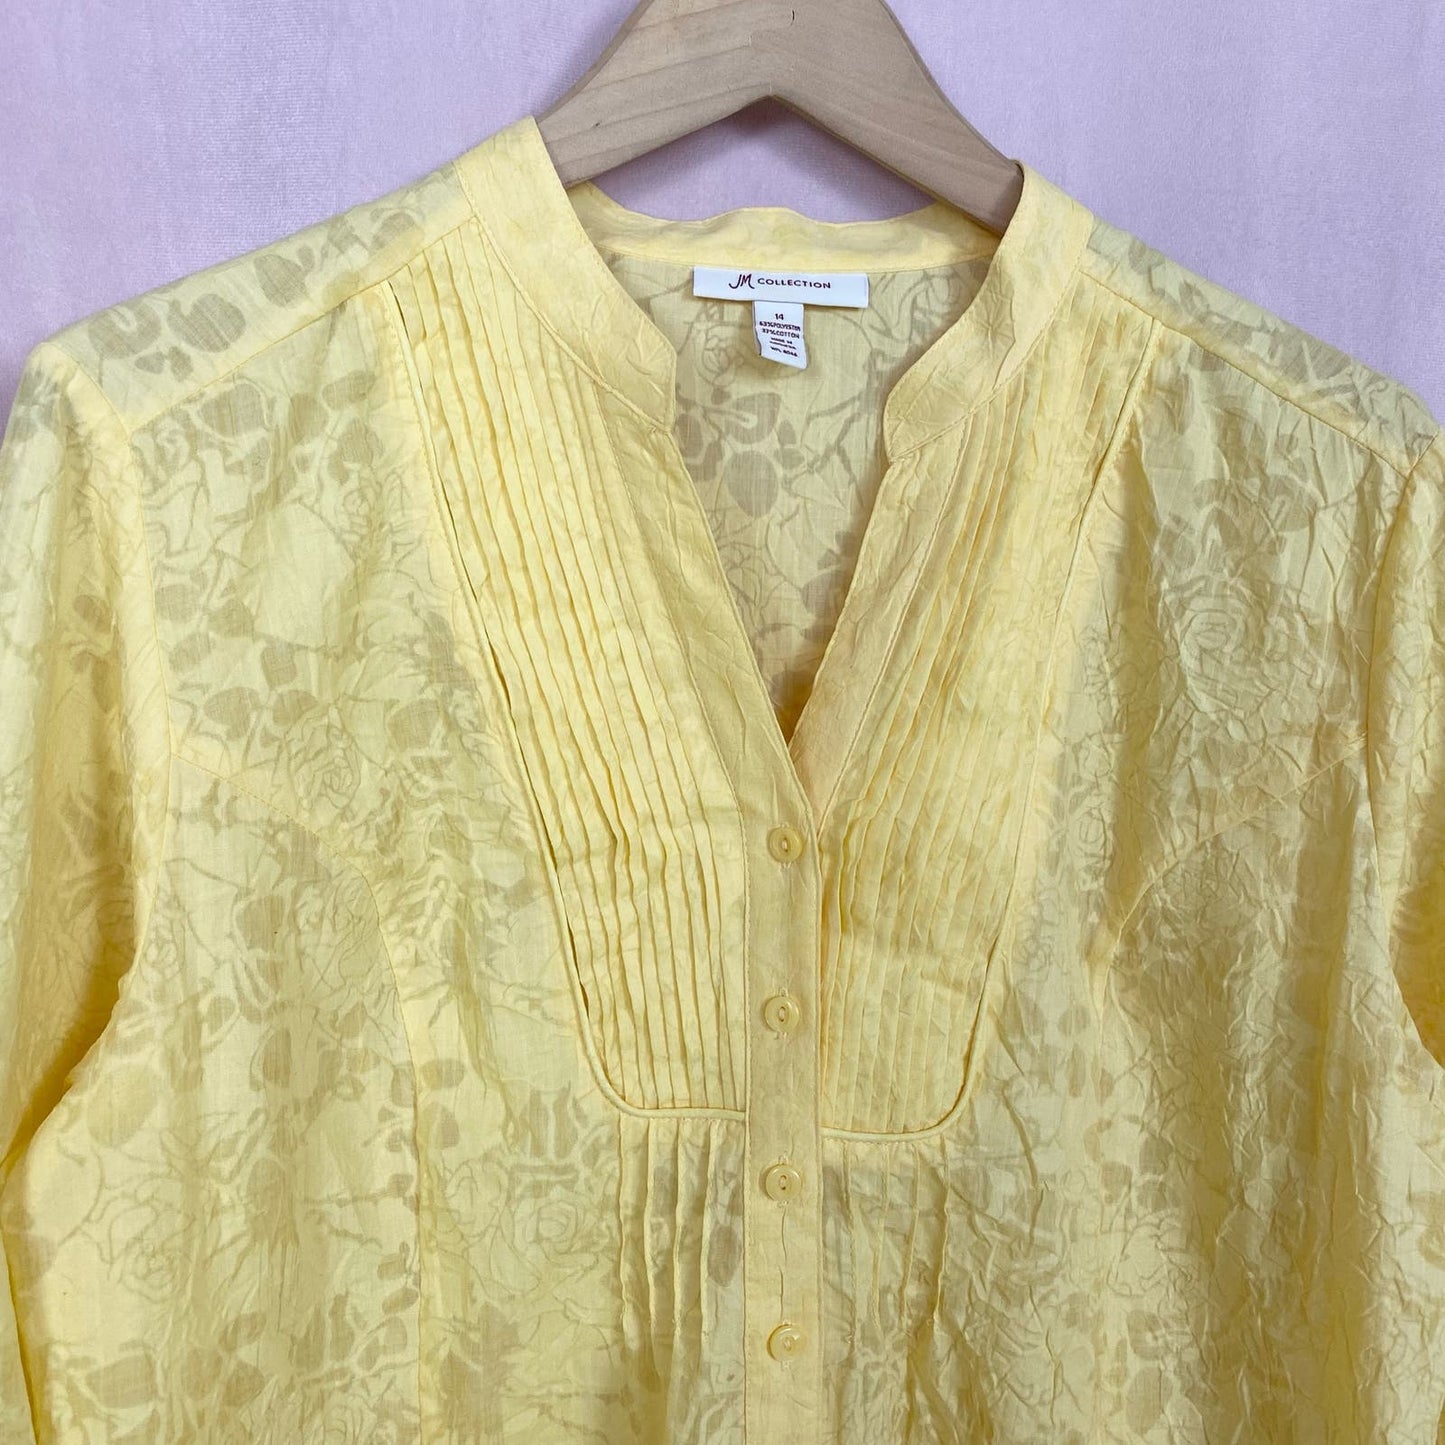 Secondhand JM Collection Yellow Floral Button Front Blouse, Size 14